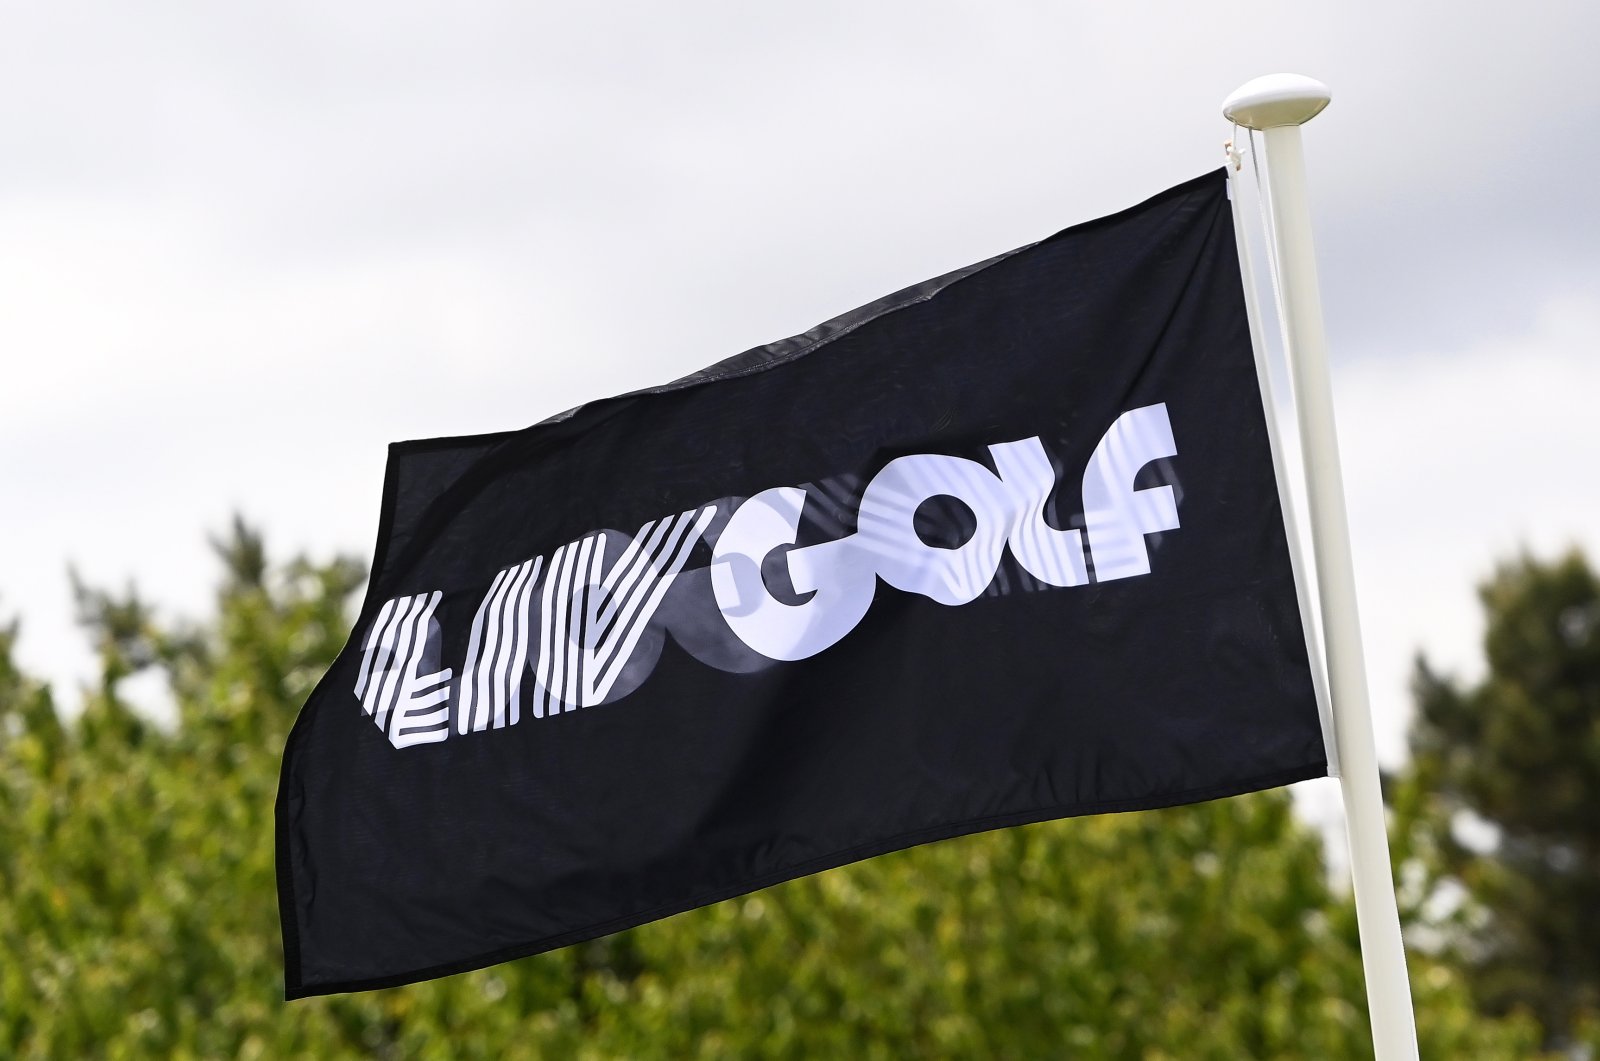 The LIV Golf logo on a flag during the LIV Golf Invitational Series, St. Albans, England, June 8, 2022. (EPA Photo)